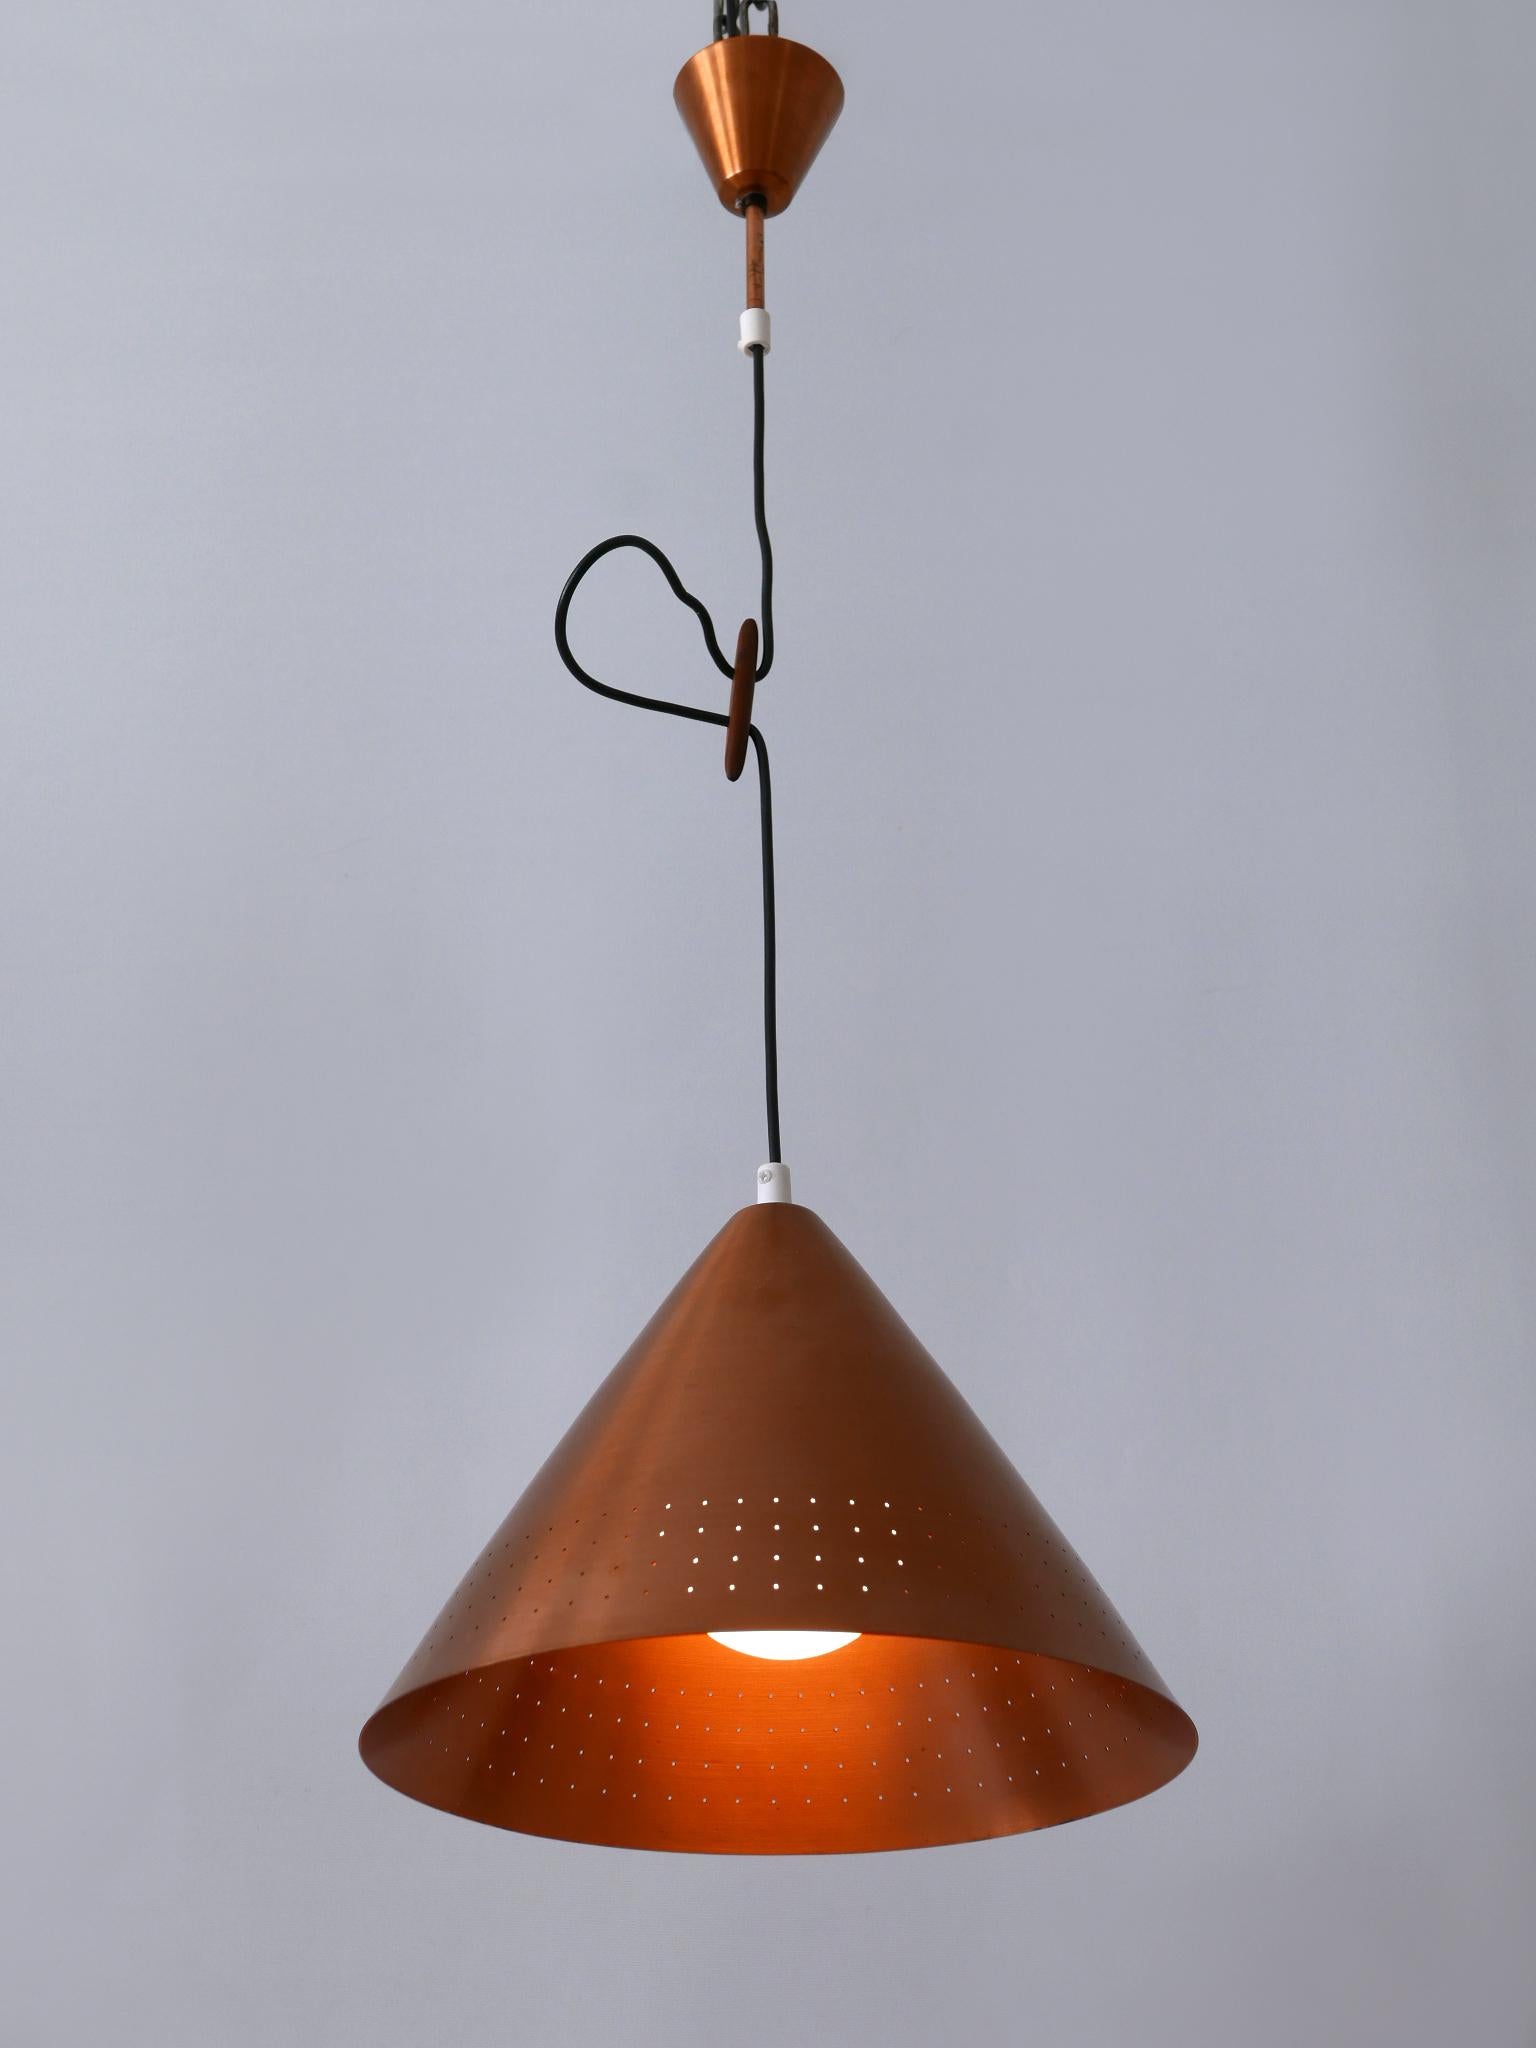 Rare Mid-Century Modern Scandinavian Copper Pendant Lamp or Hanging Light  1960s For Sale 6